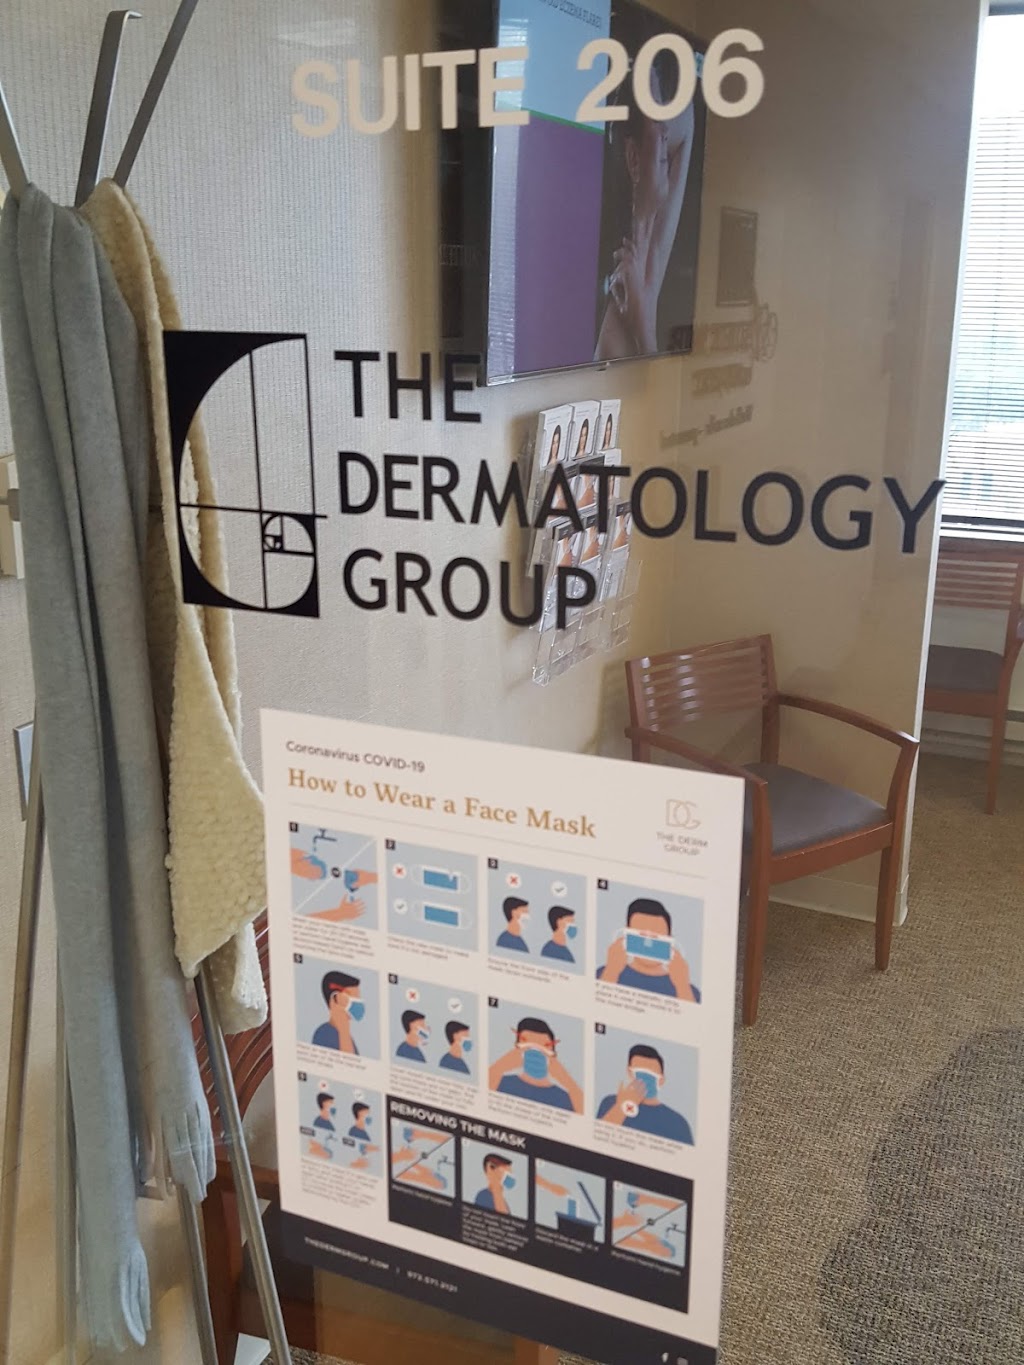 Schweiger Dermatology Group - Morristown | 310 Madison Ave #206, Morristown, NJ 07960 | Phone: (862) 252-8135